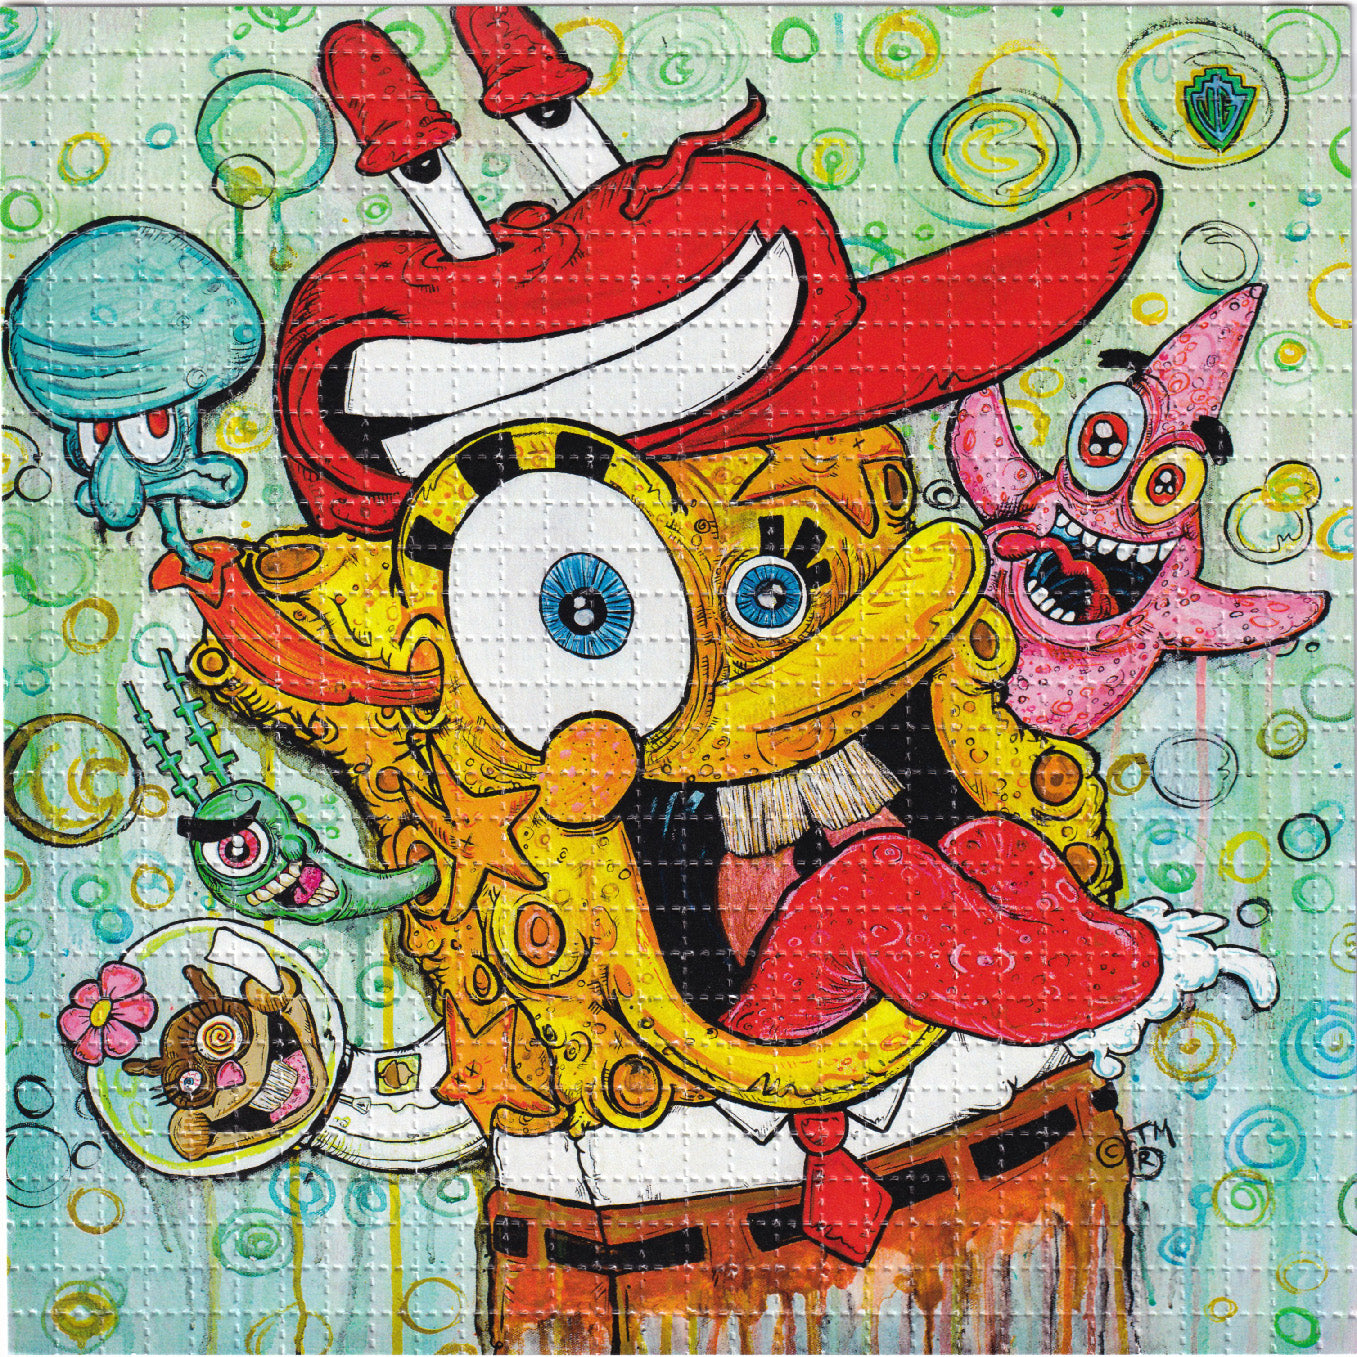 Spun Bob by Vincent Gordon SIGNED Limited Edition LSD blotter art print